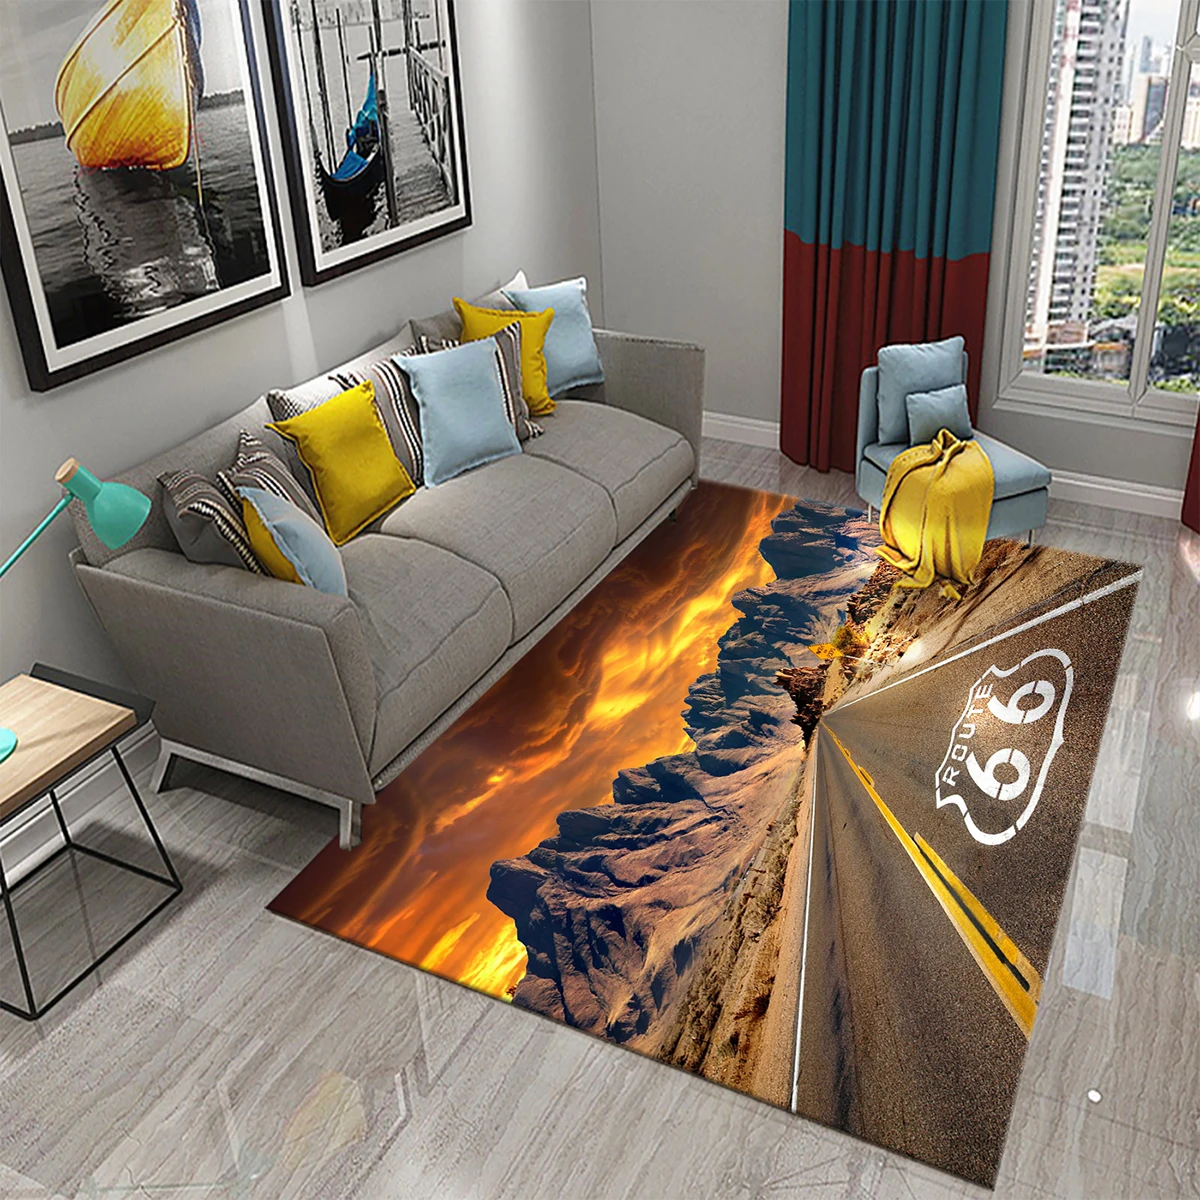 3D Fashion Route 66 Carpet Anti-slip Mat for Living Room Bedroom Rug Kitchen Bathroom Floor Area Mats Doormats for Home Decor